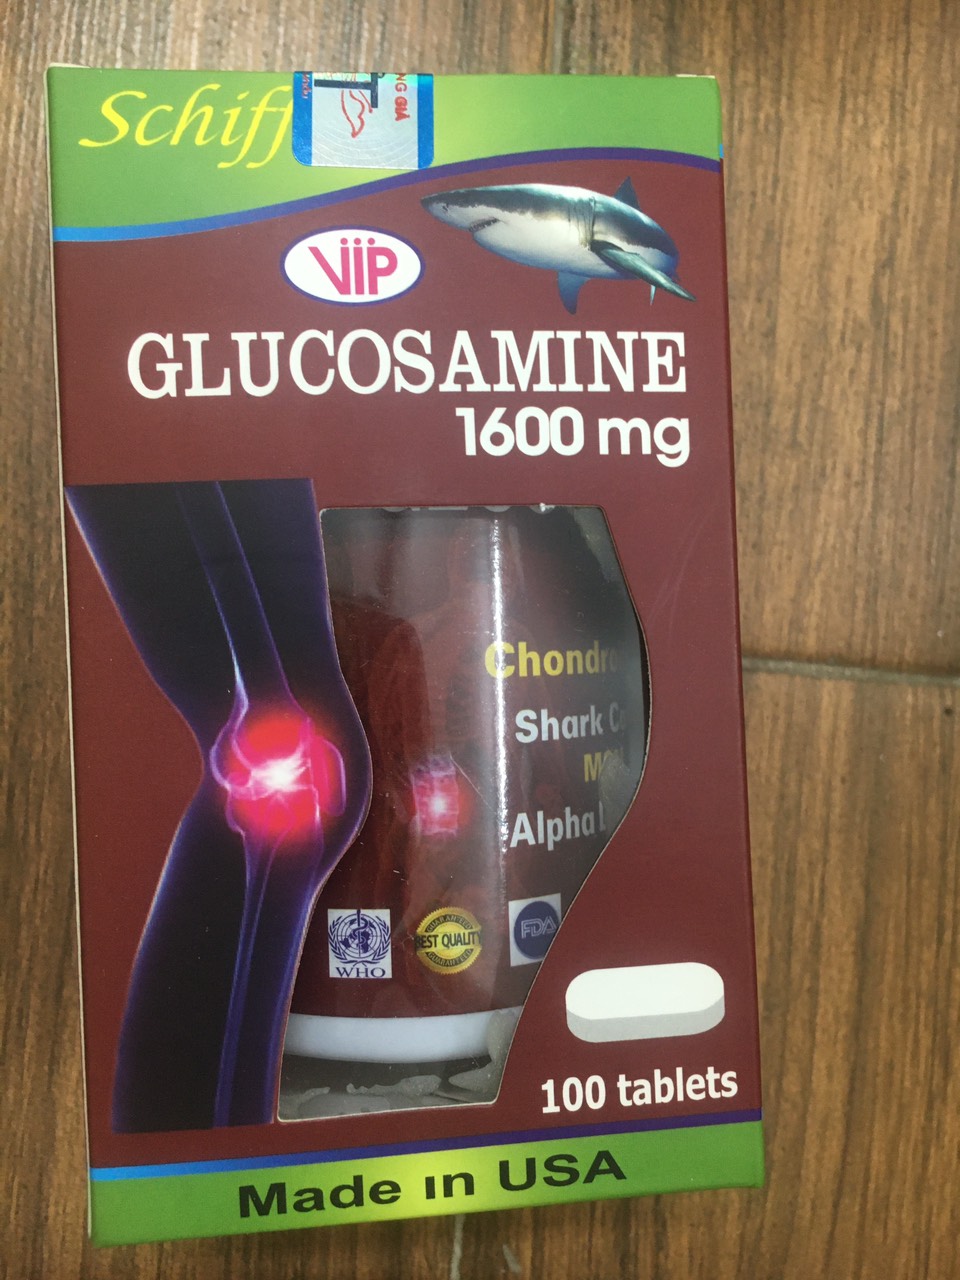 Glucosamine Vip Schiff 1600mg